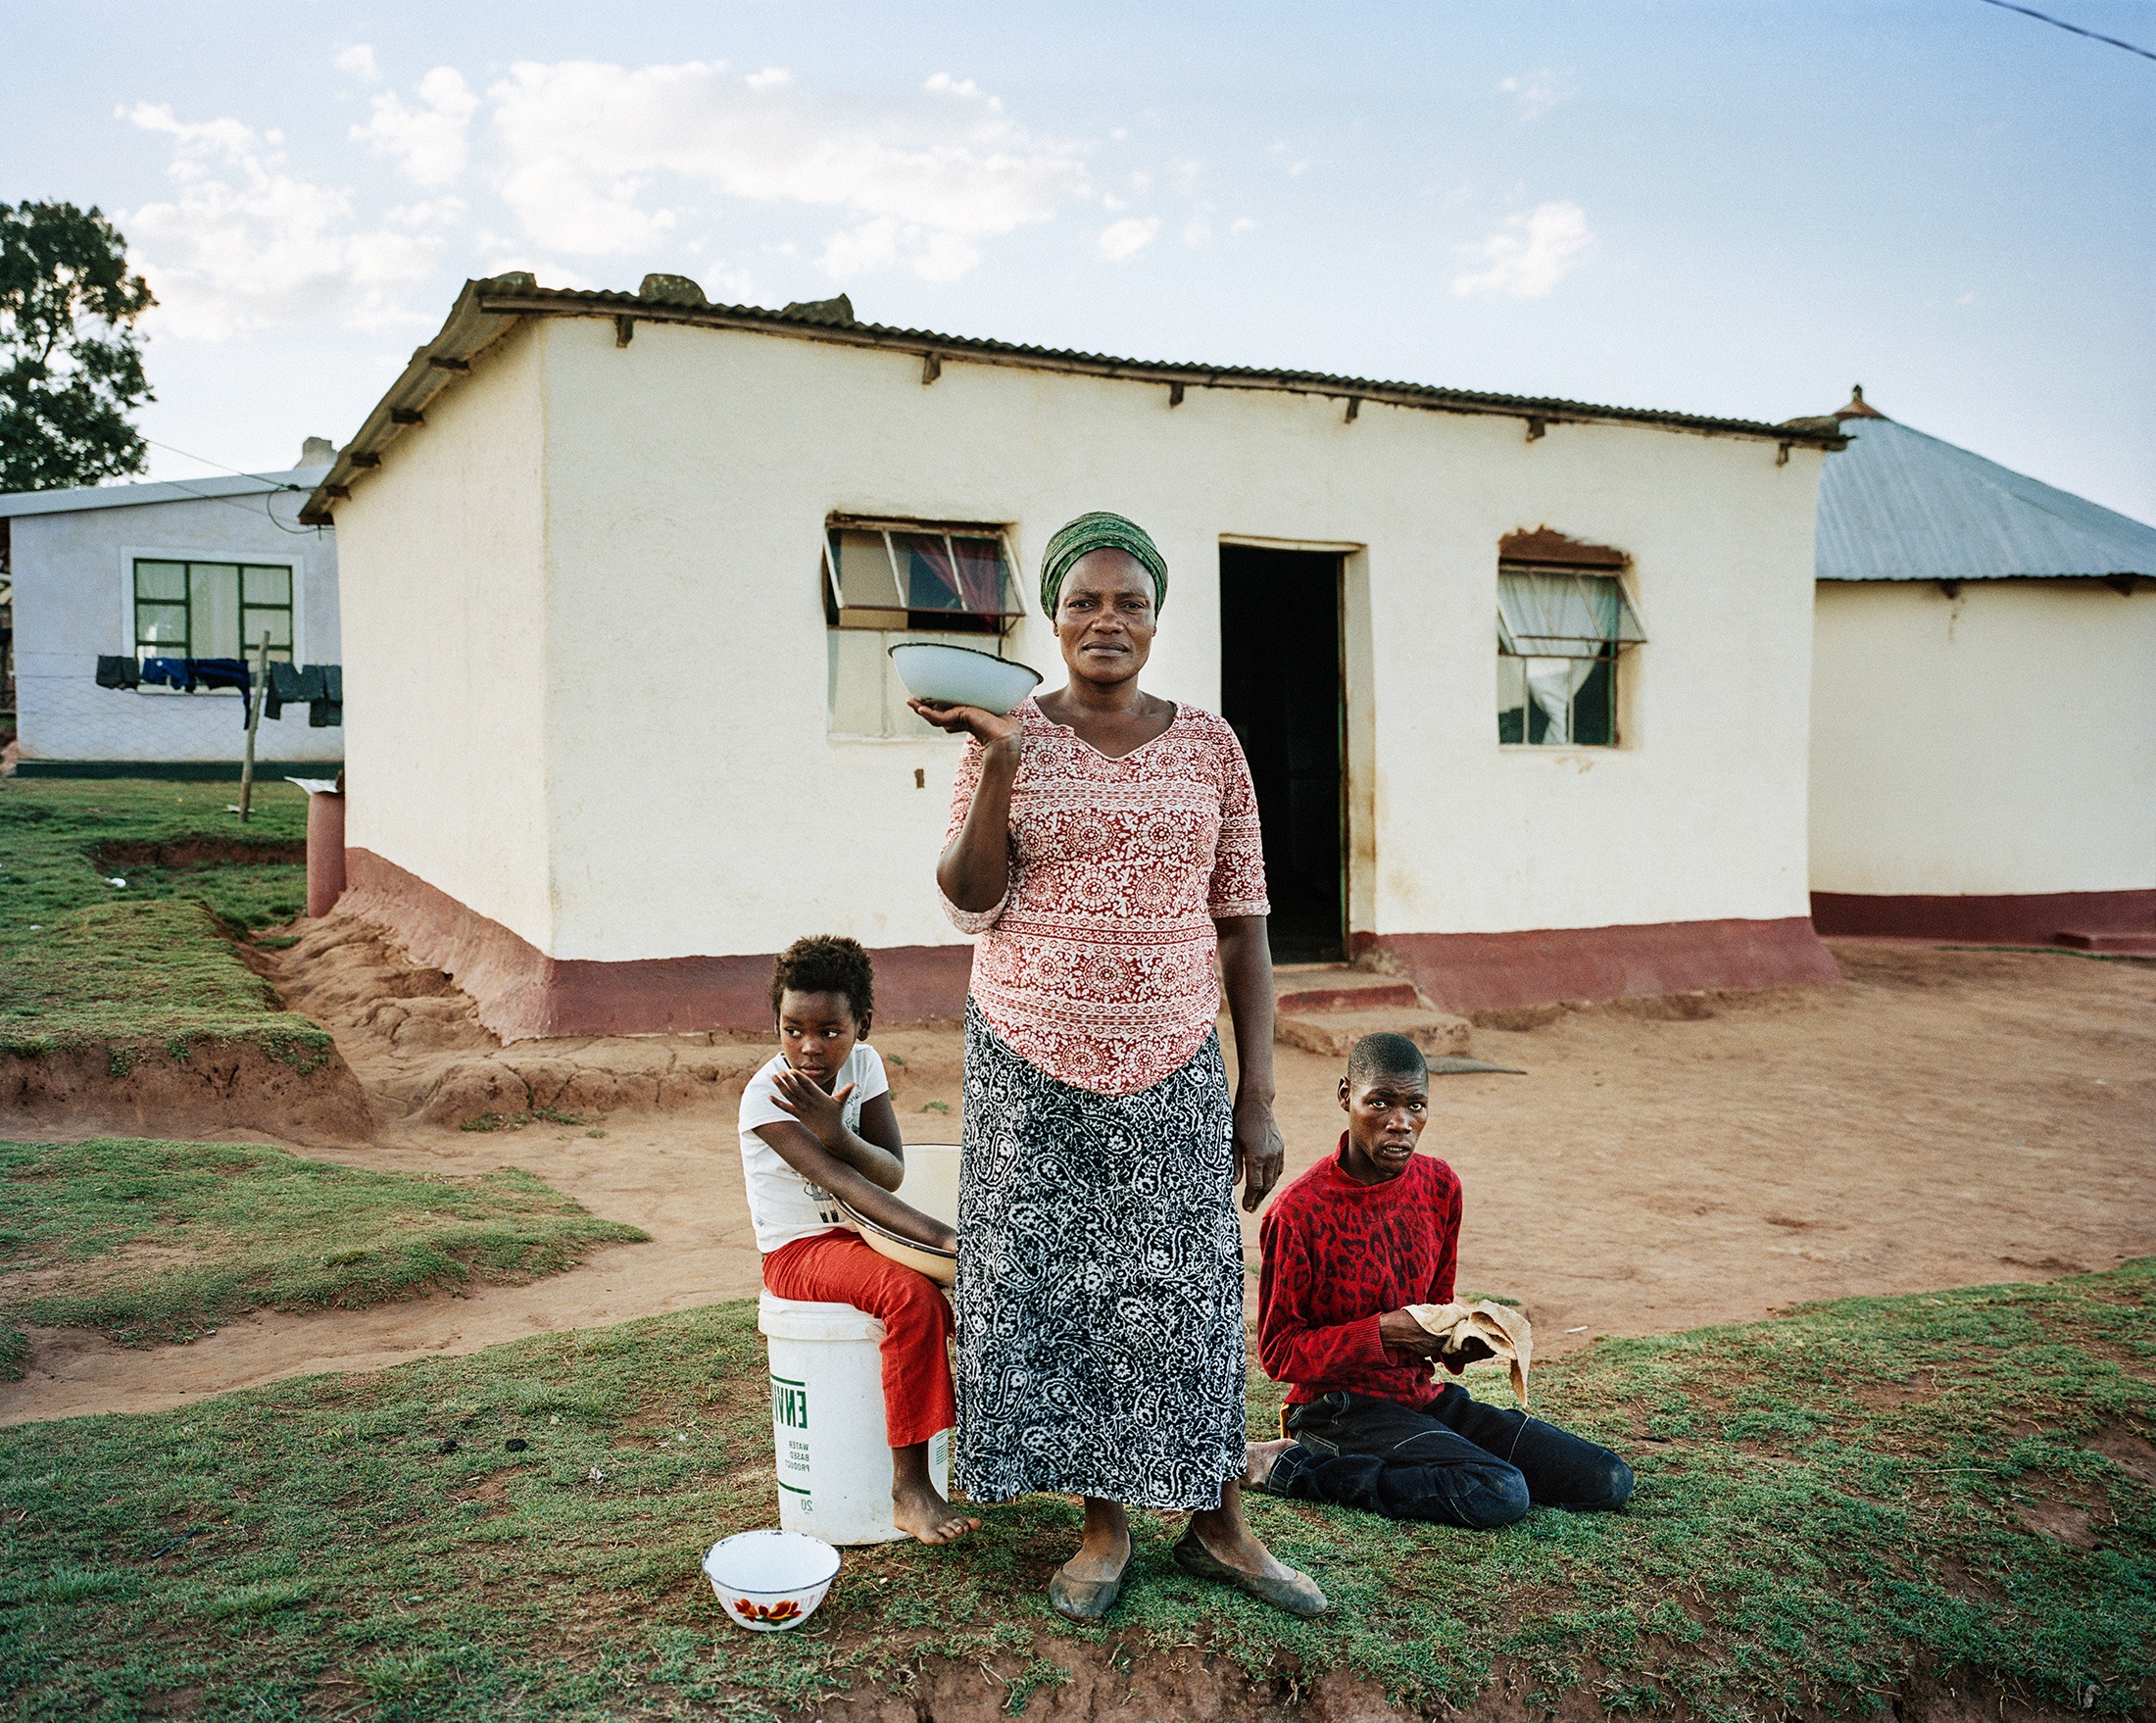 Lindokuhle Sobekwa's photograph 'Ekhwenzane' shows three individuals arranged in front of a square shaped house.
